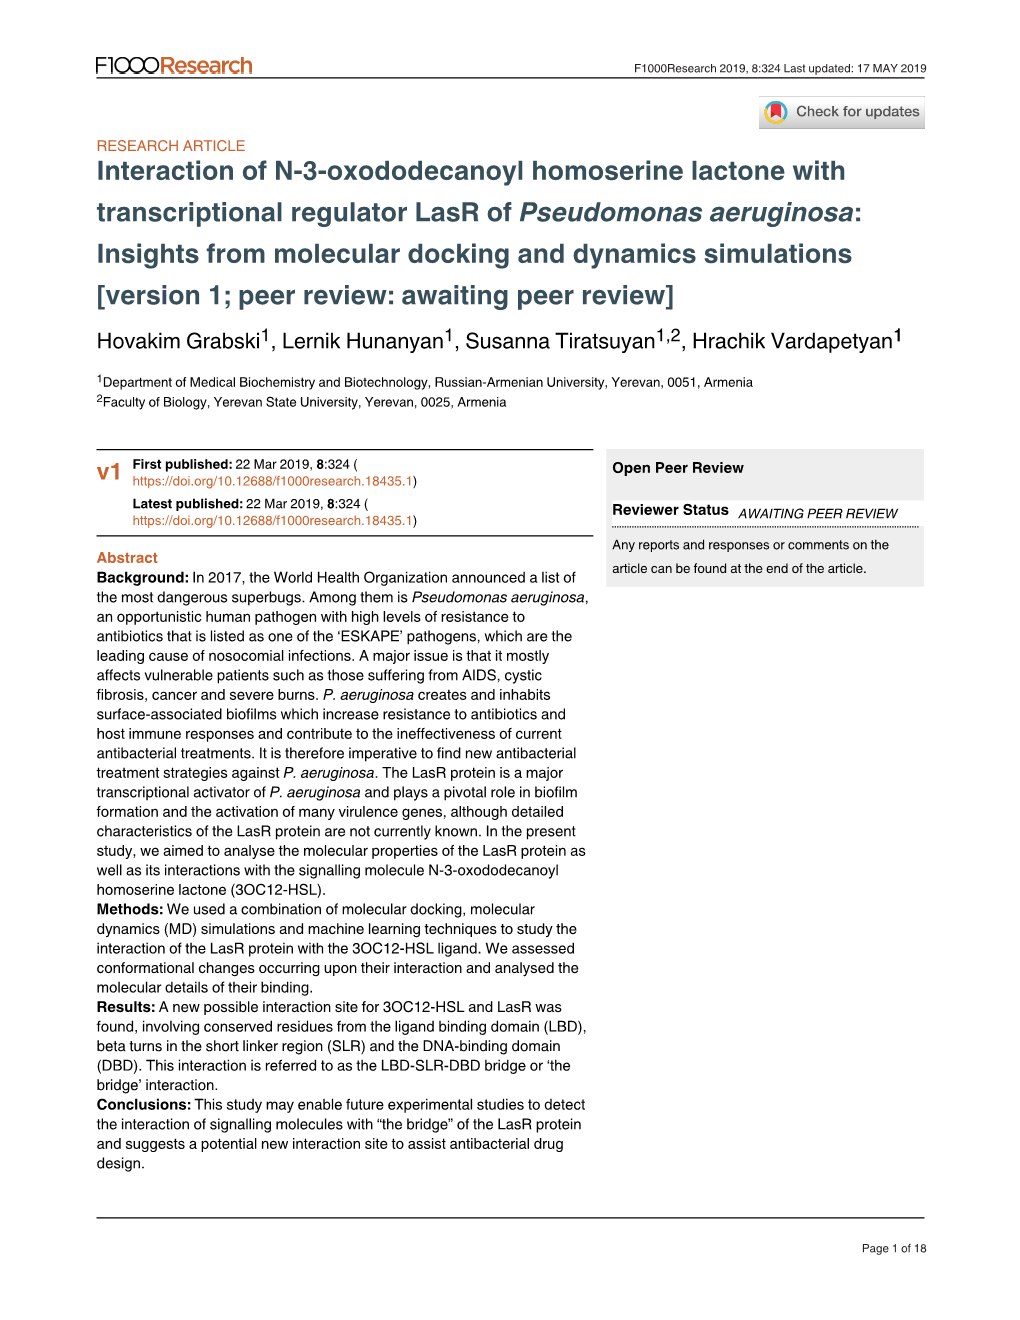 Interaction of N-3-Oxododecanoyl Homoserine Lactone with Transcriptional Regulator Lasr of Pseudomonas Aeruginosa